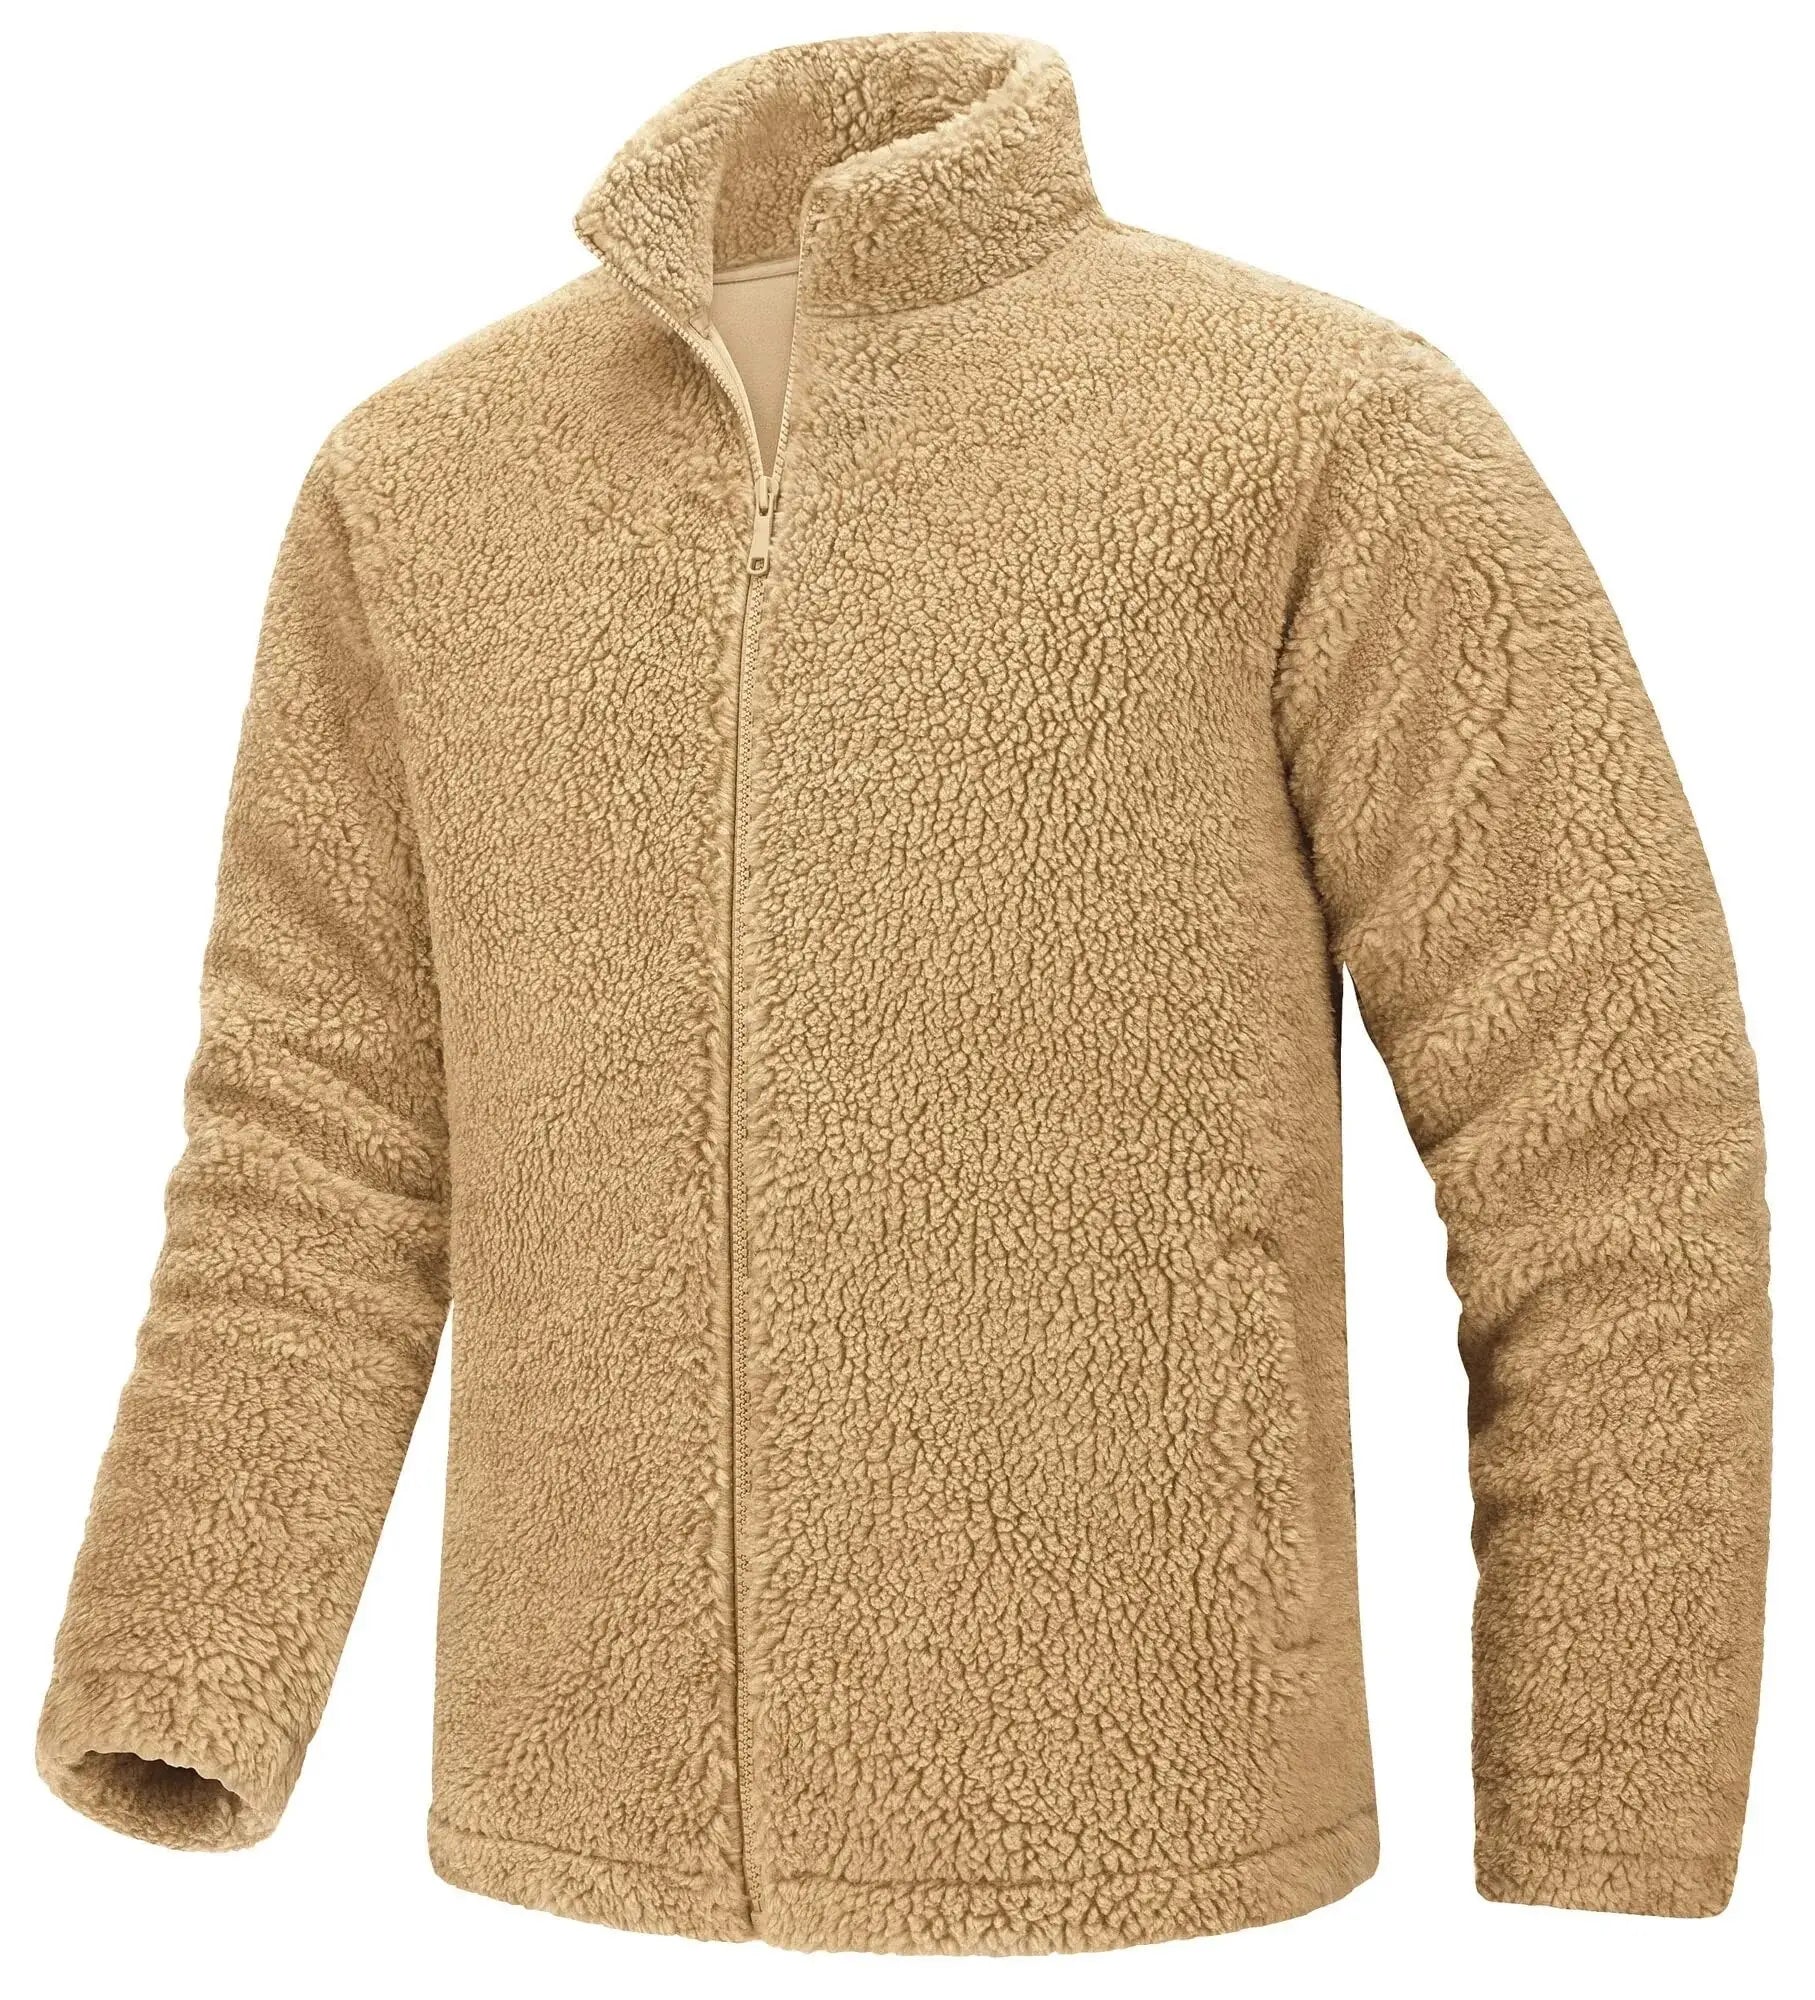 Warm and Cozy Sherpa Fleece Jacket with Zipper Pockets Liograft